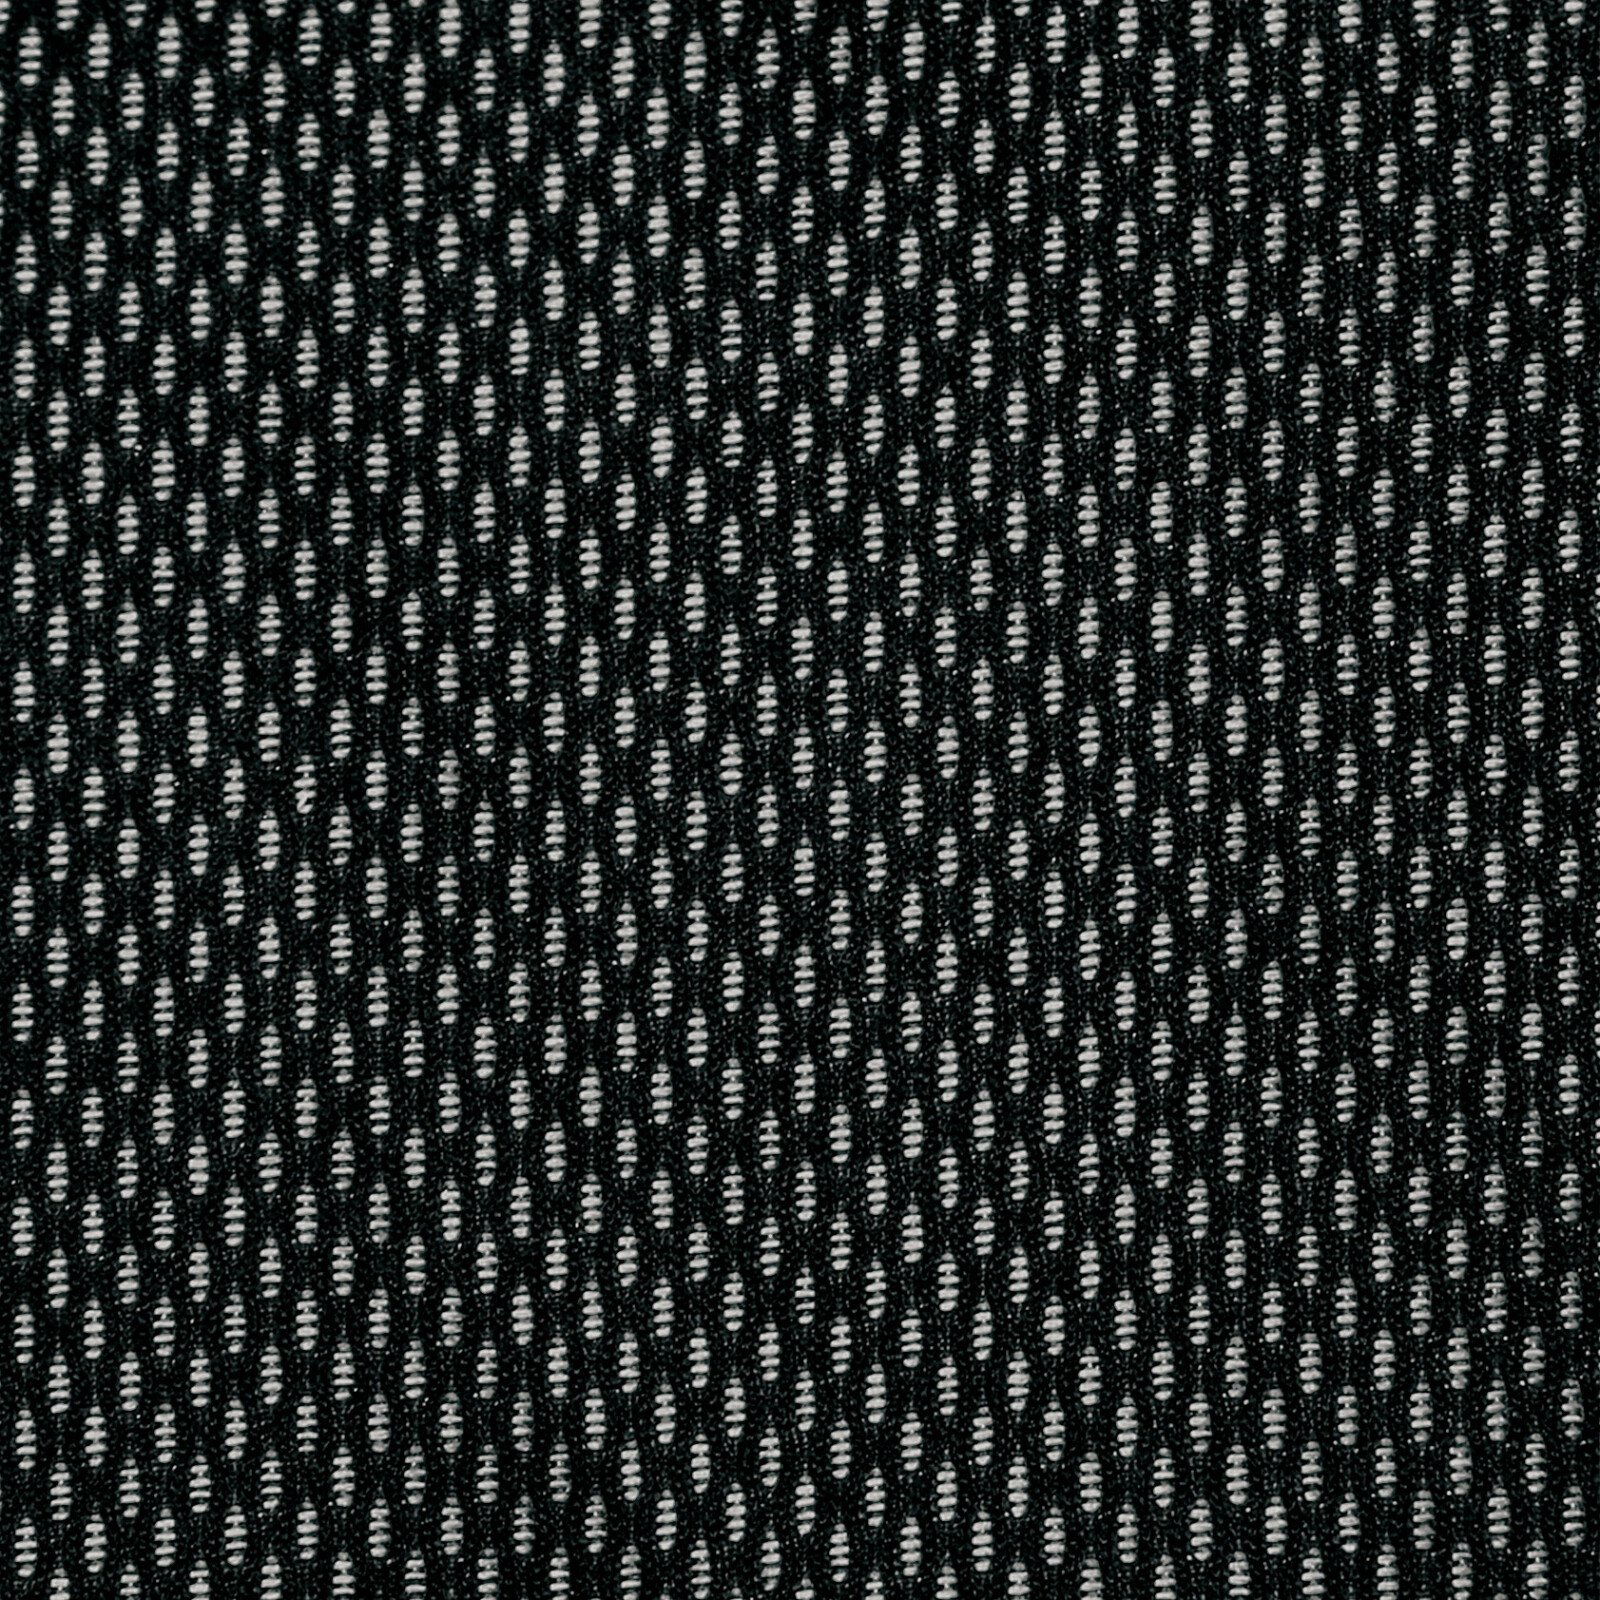 Sport, high-quality jacquard seat cover set - Grey/Black thumb